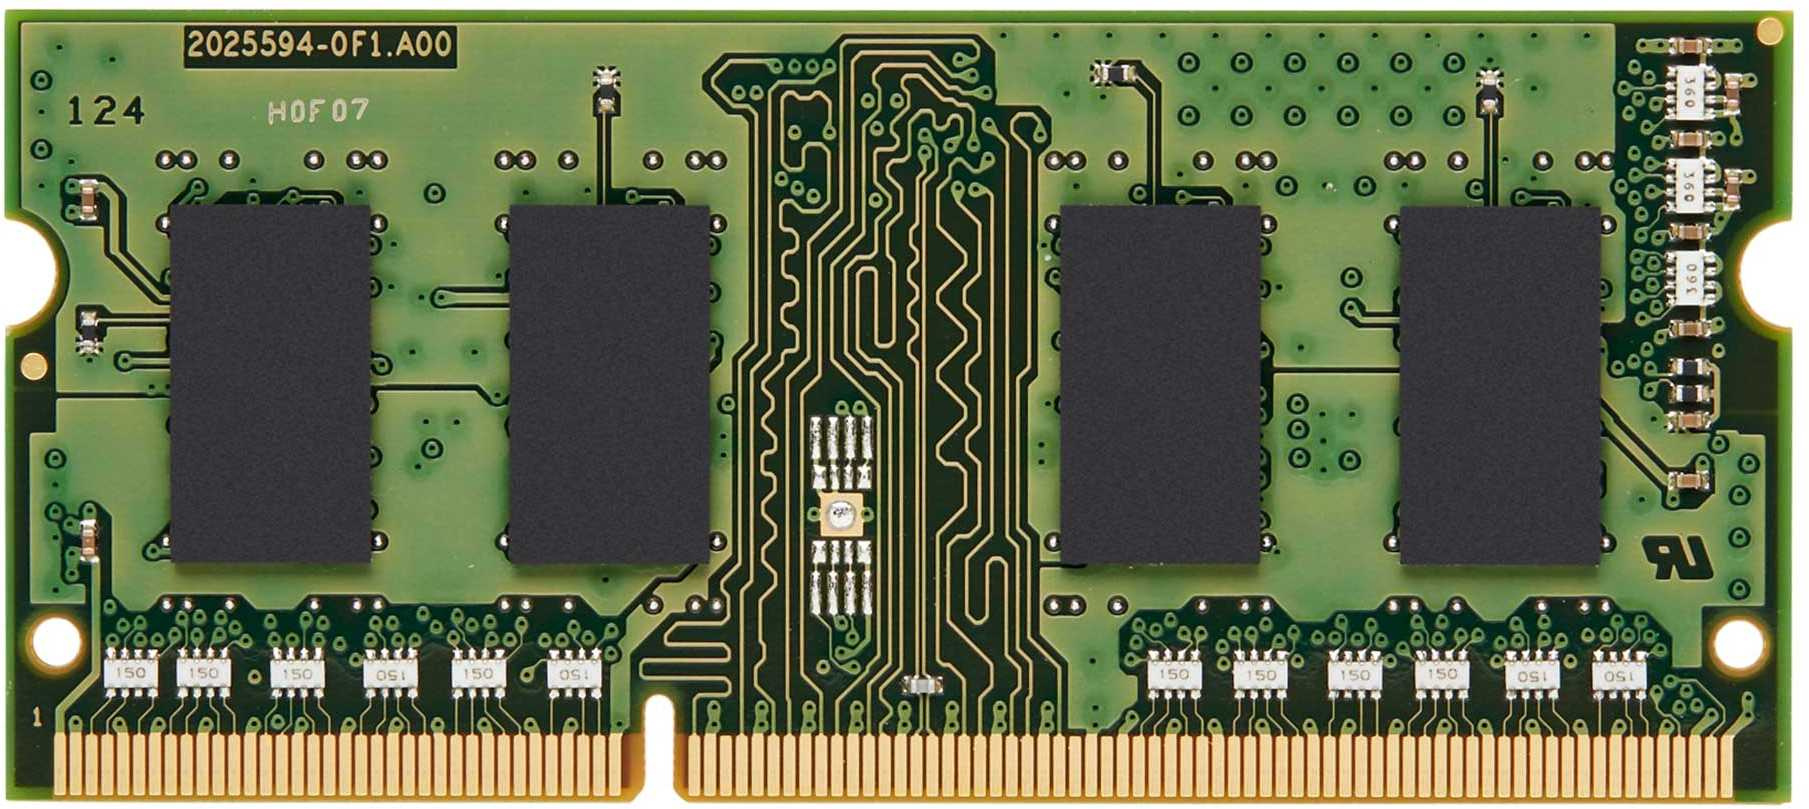 Модуль памяти Kingston VALUERAM 8 ГБ SODIMM DDR3L 1600 МГц, KVR16LS11/8WP